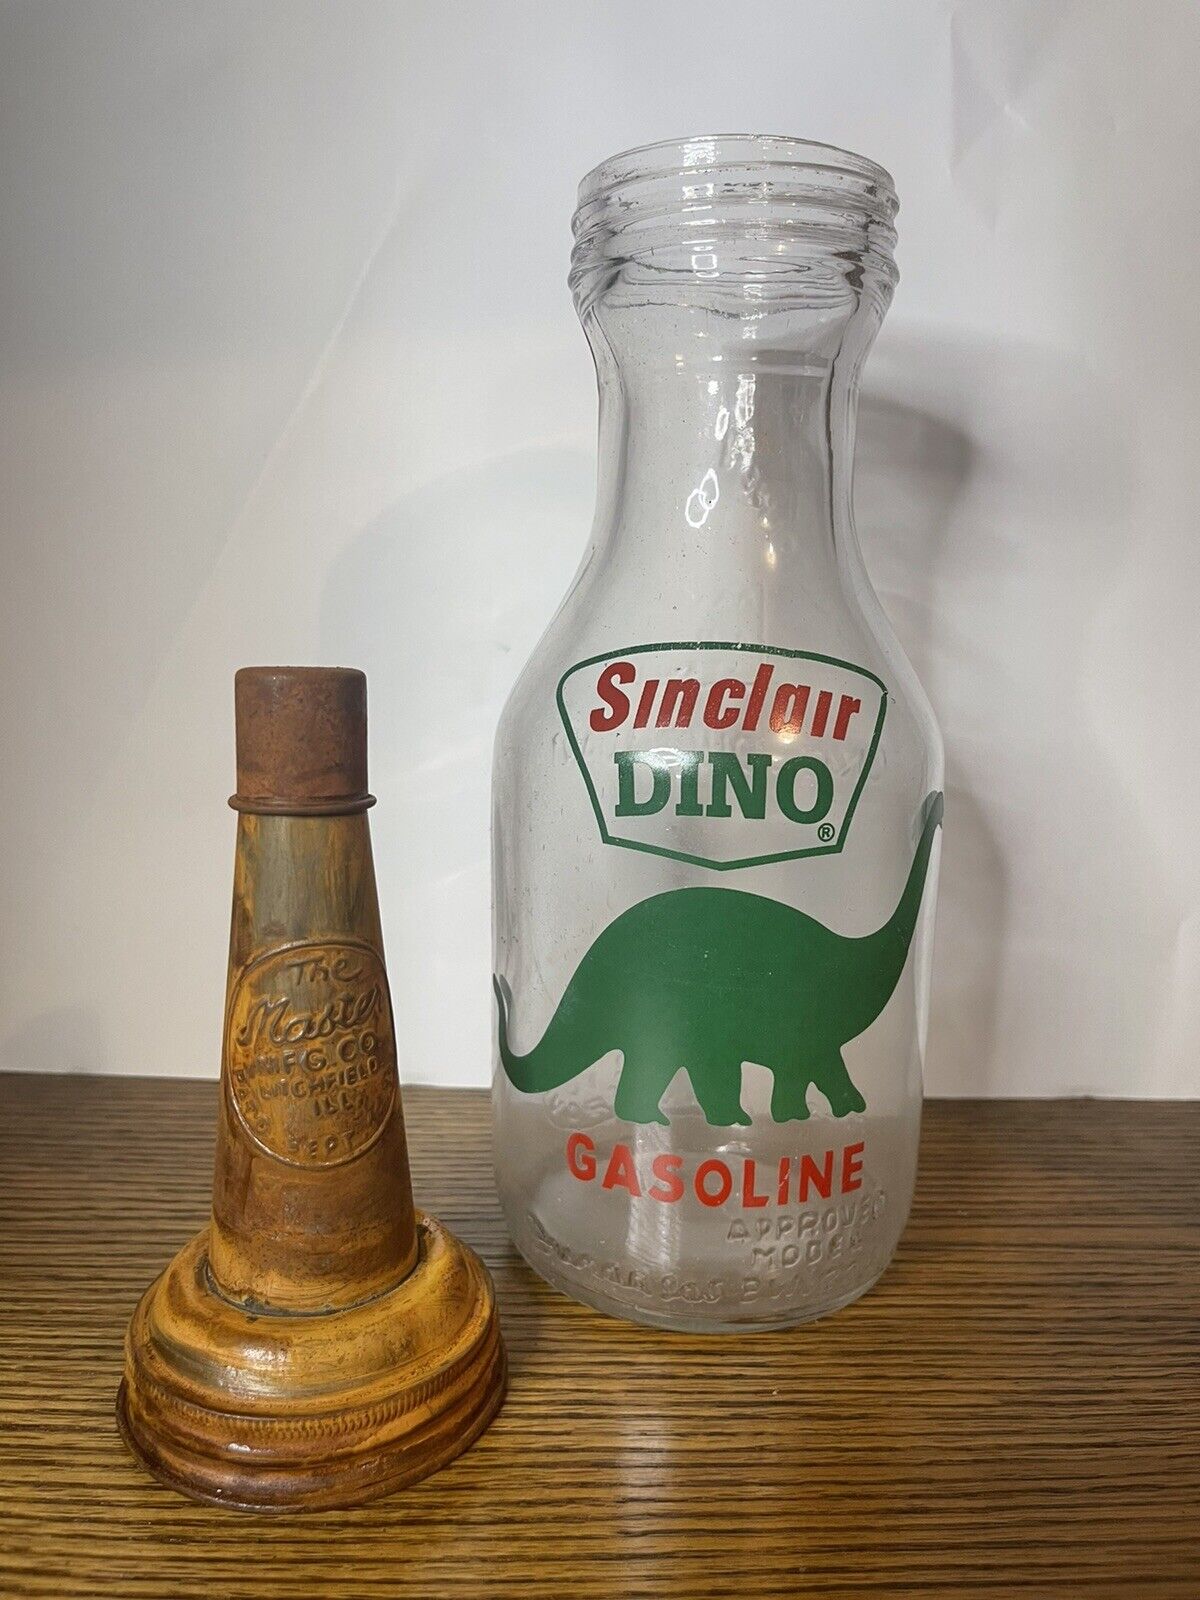 SINCLAIR DINO GASOLINE Glass Motor Oil Bottle 1 Quart Vintage Style Gas Station